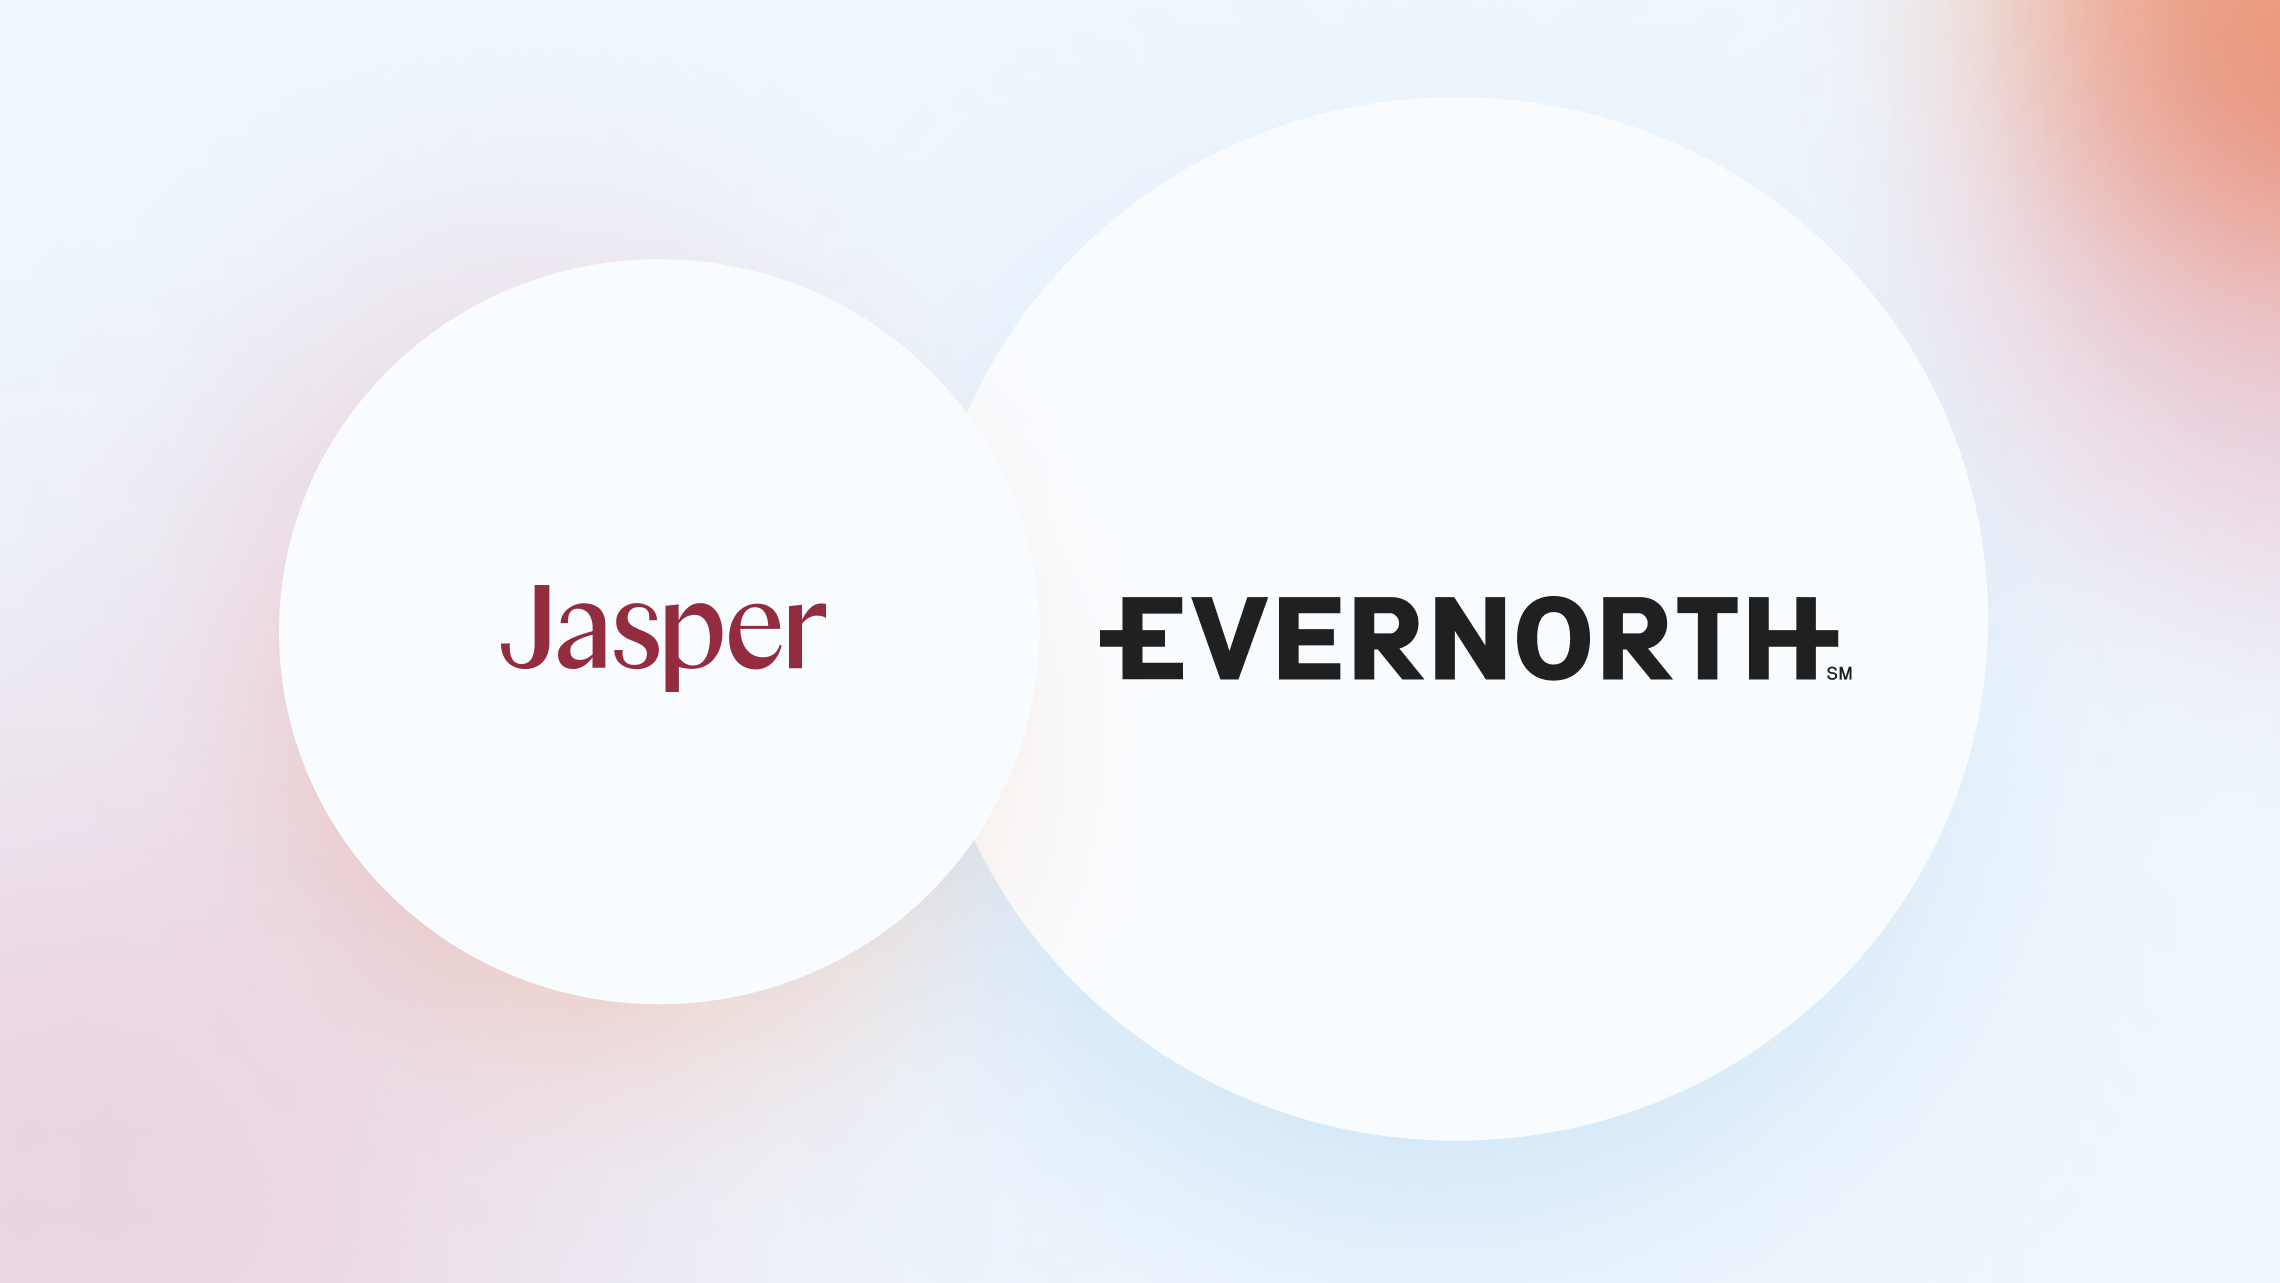 Jasper logo and Evernorth logo